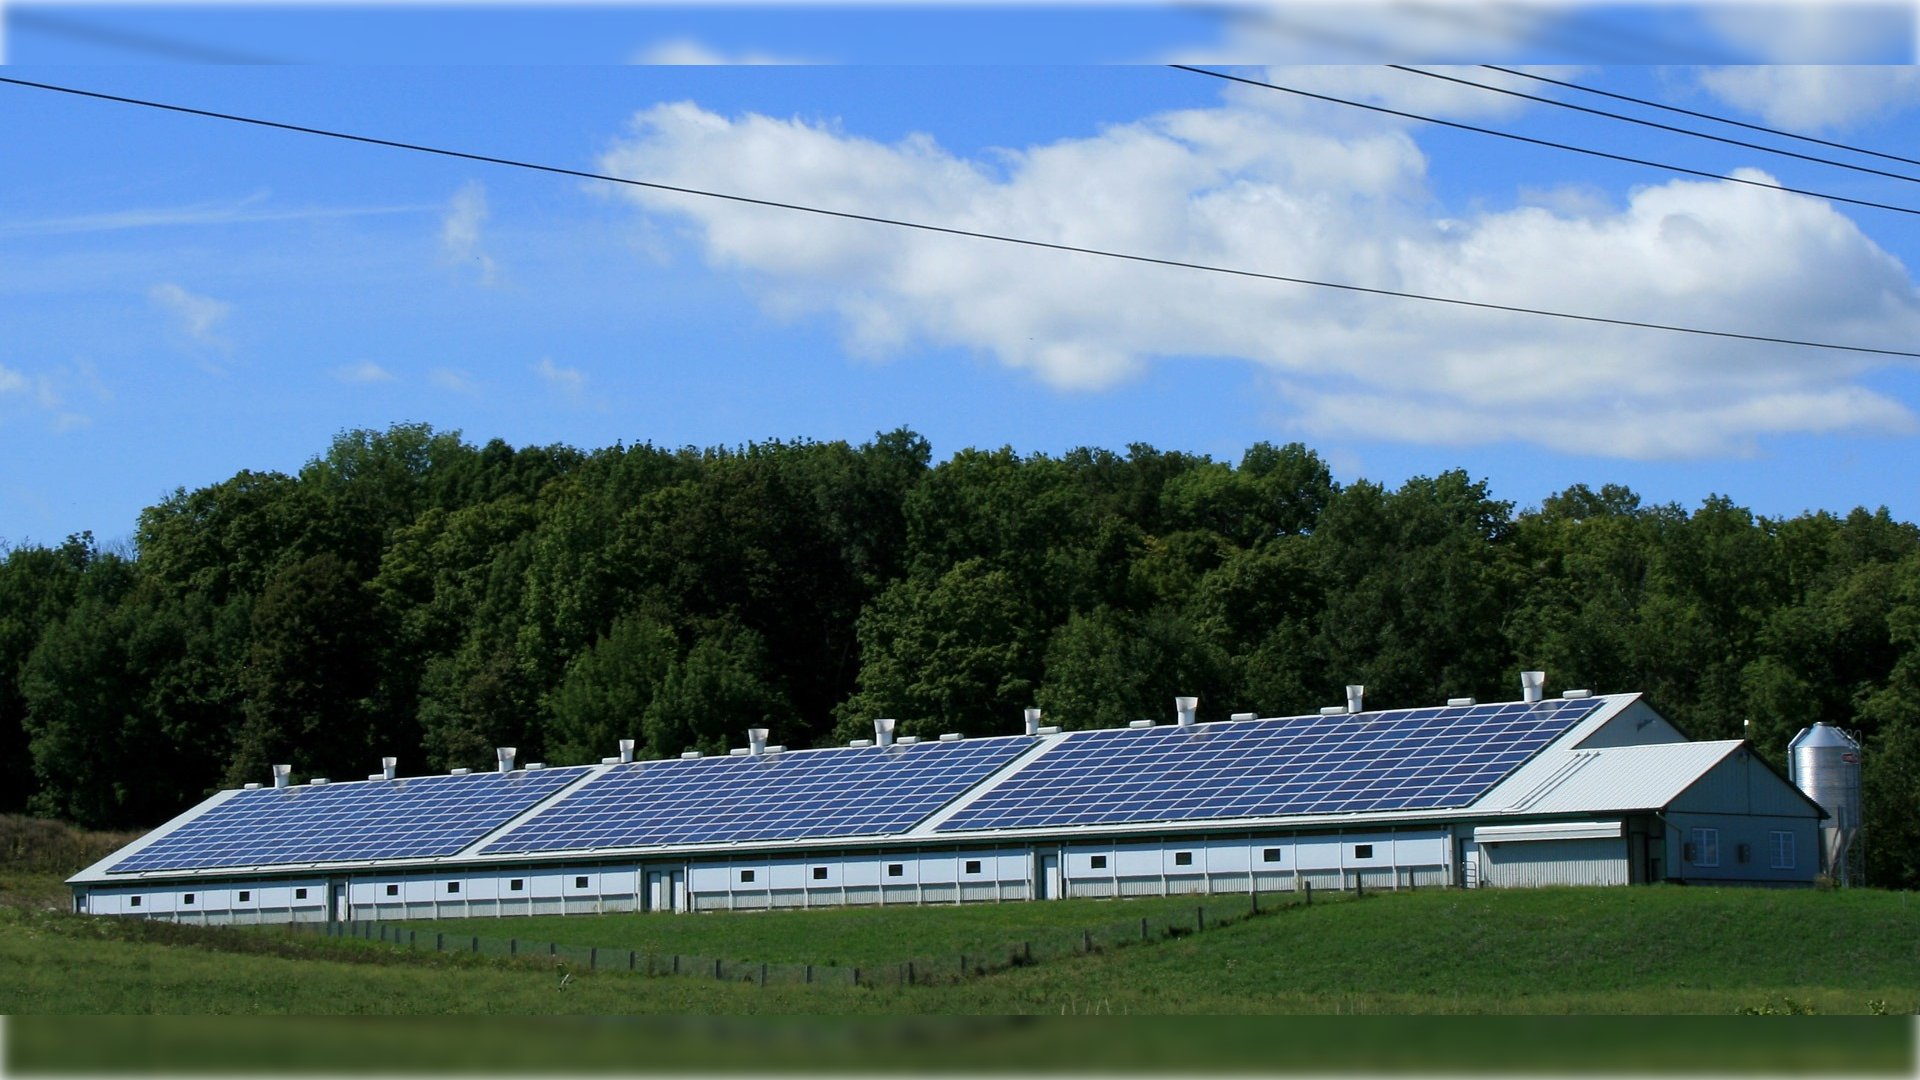 solar-power-sun-barn-power-52b7986d80b6eb3371bd7a6d4a4ad1d2_16x9